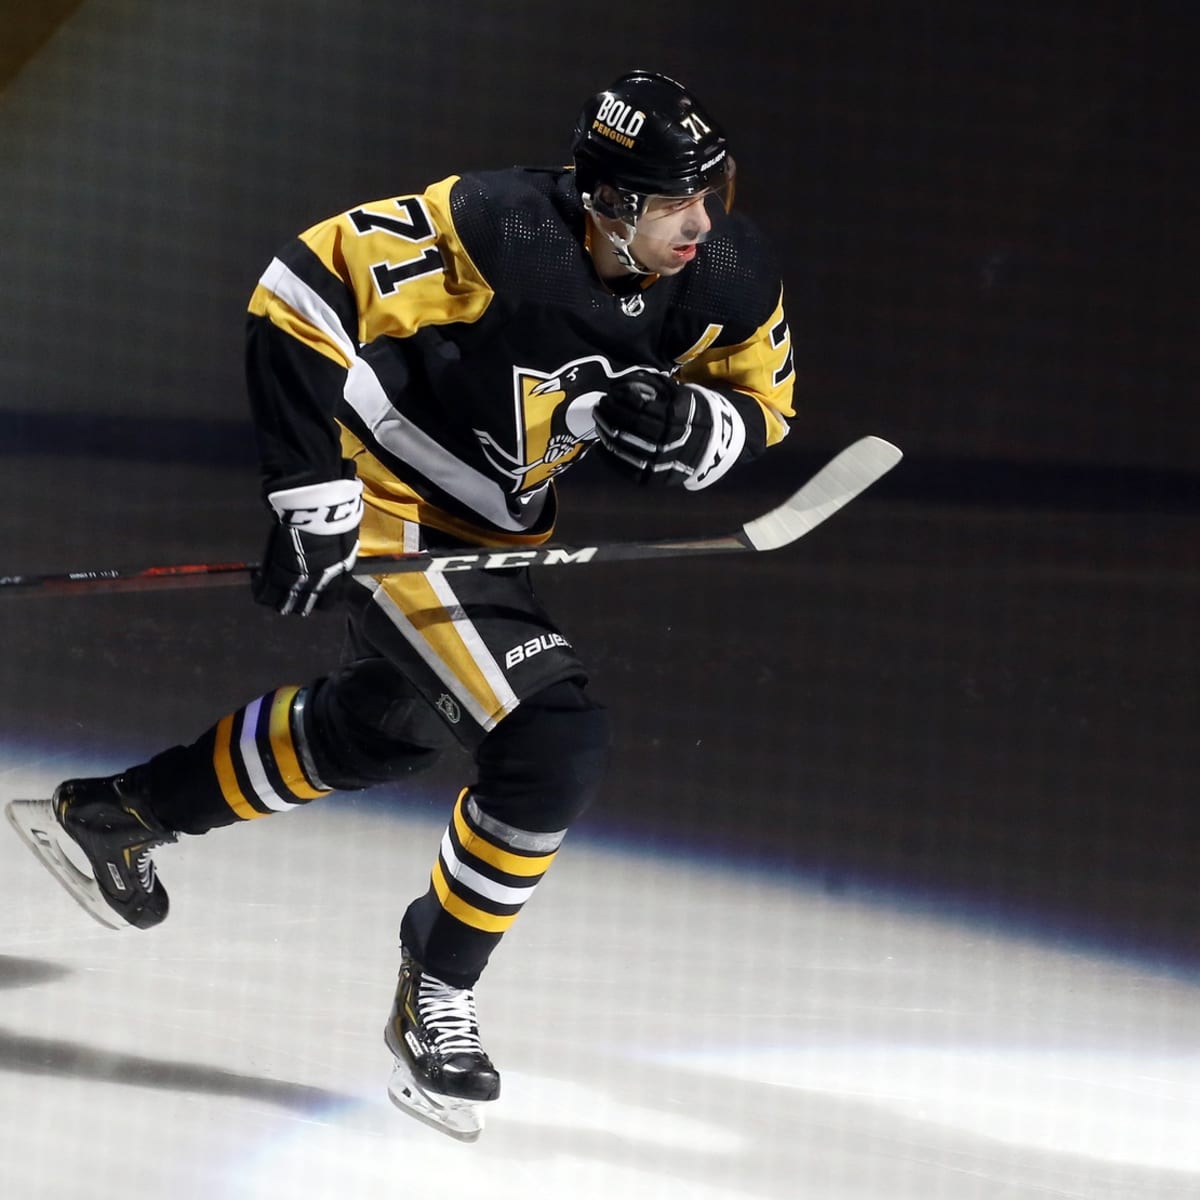 Penguins C Evgeni Malkin plays in 1,000th NHL game